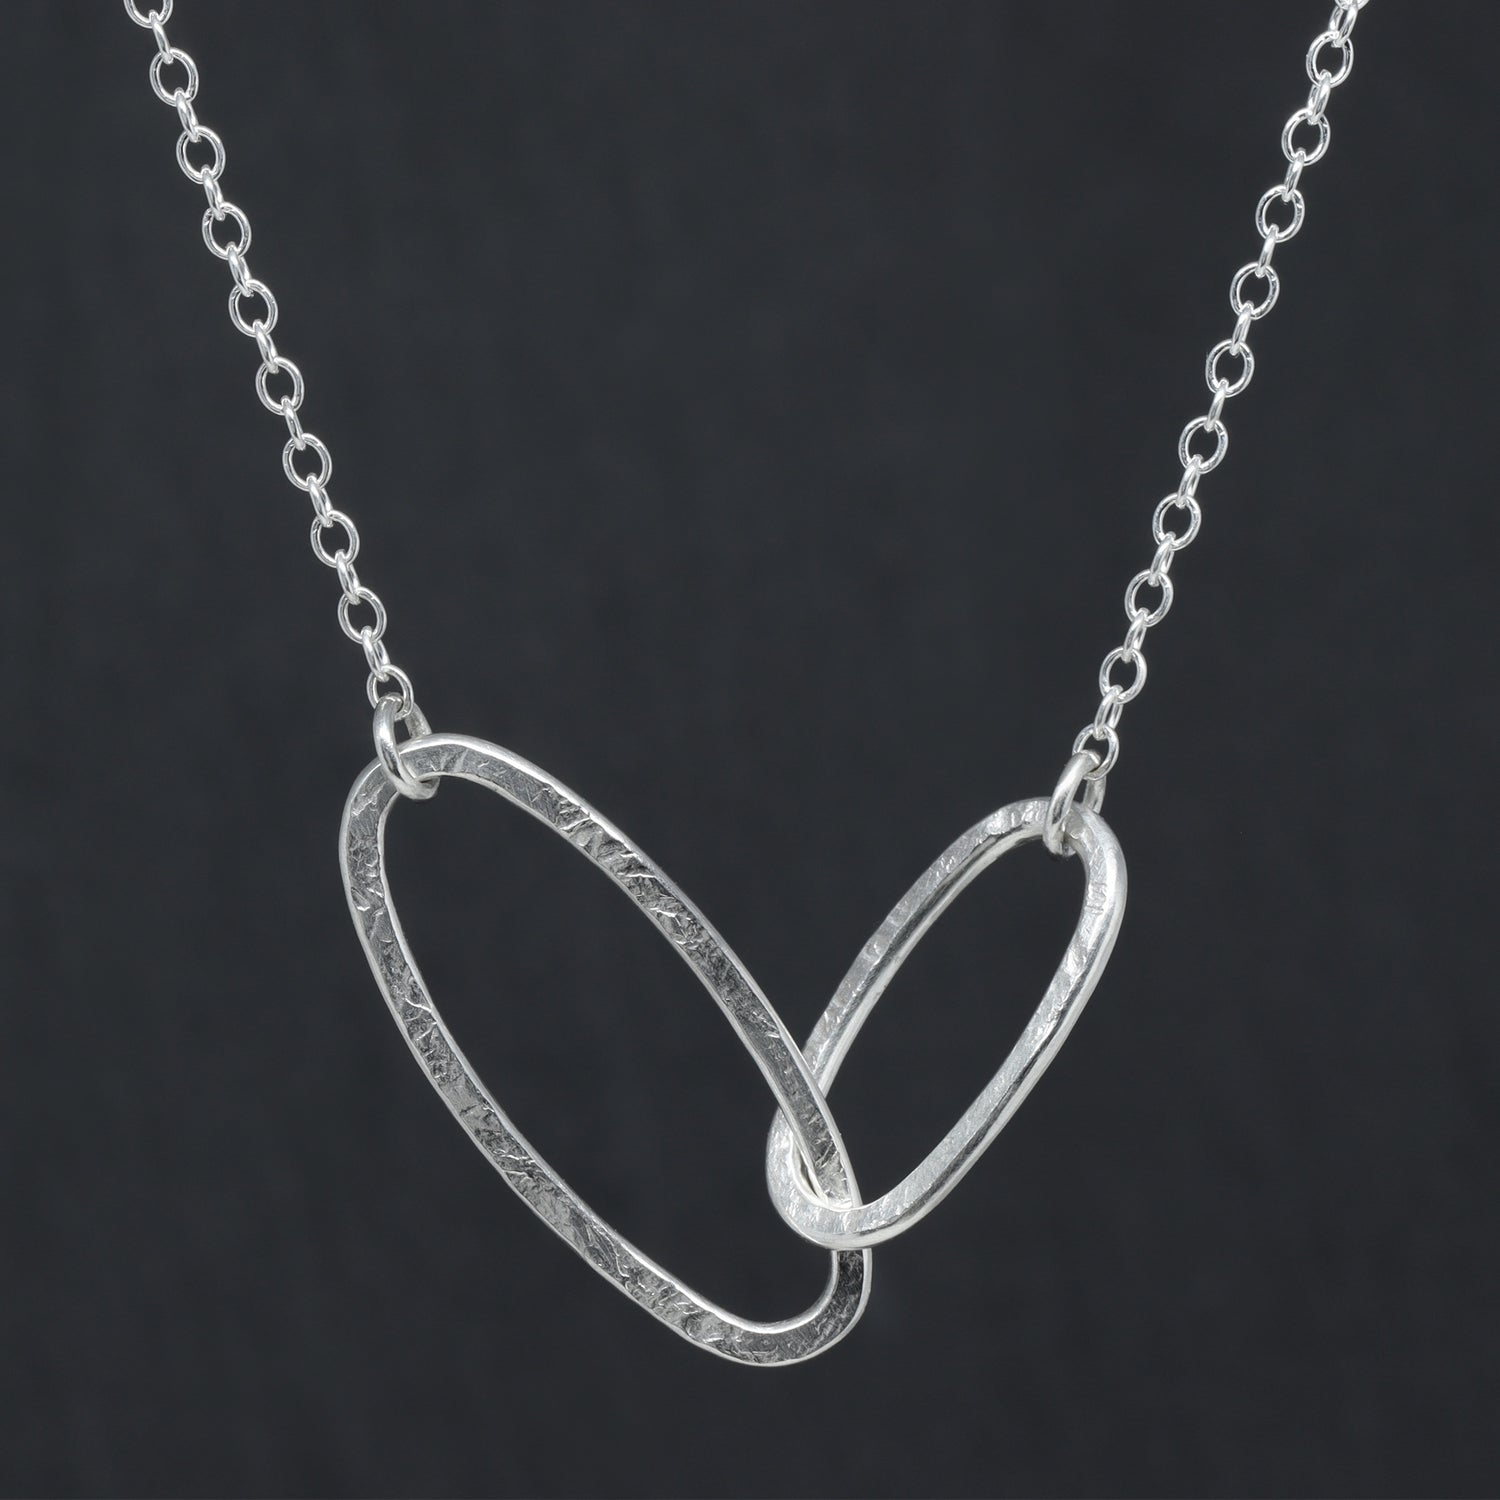 Aperture Link Necklace - Bright Sterling